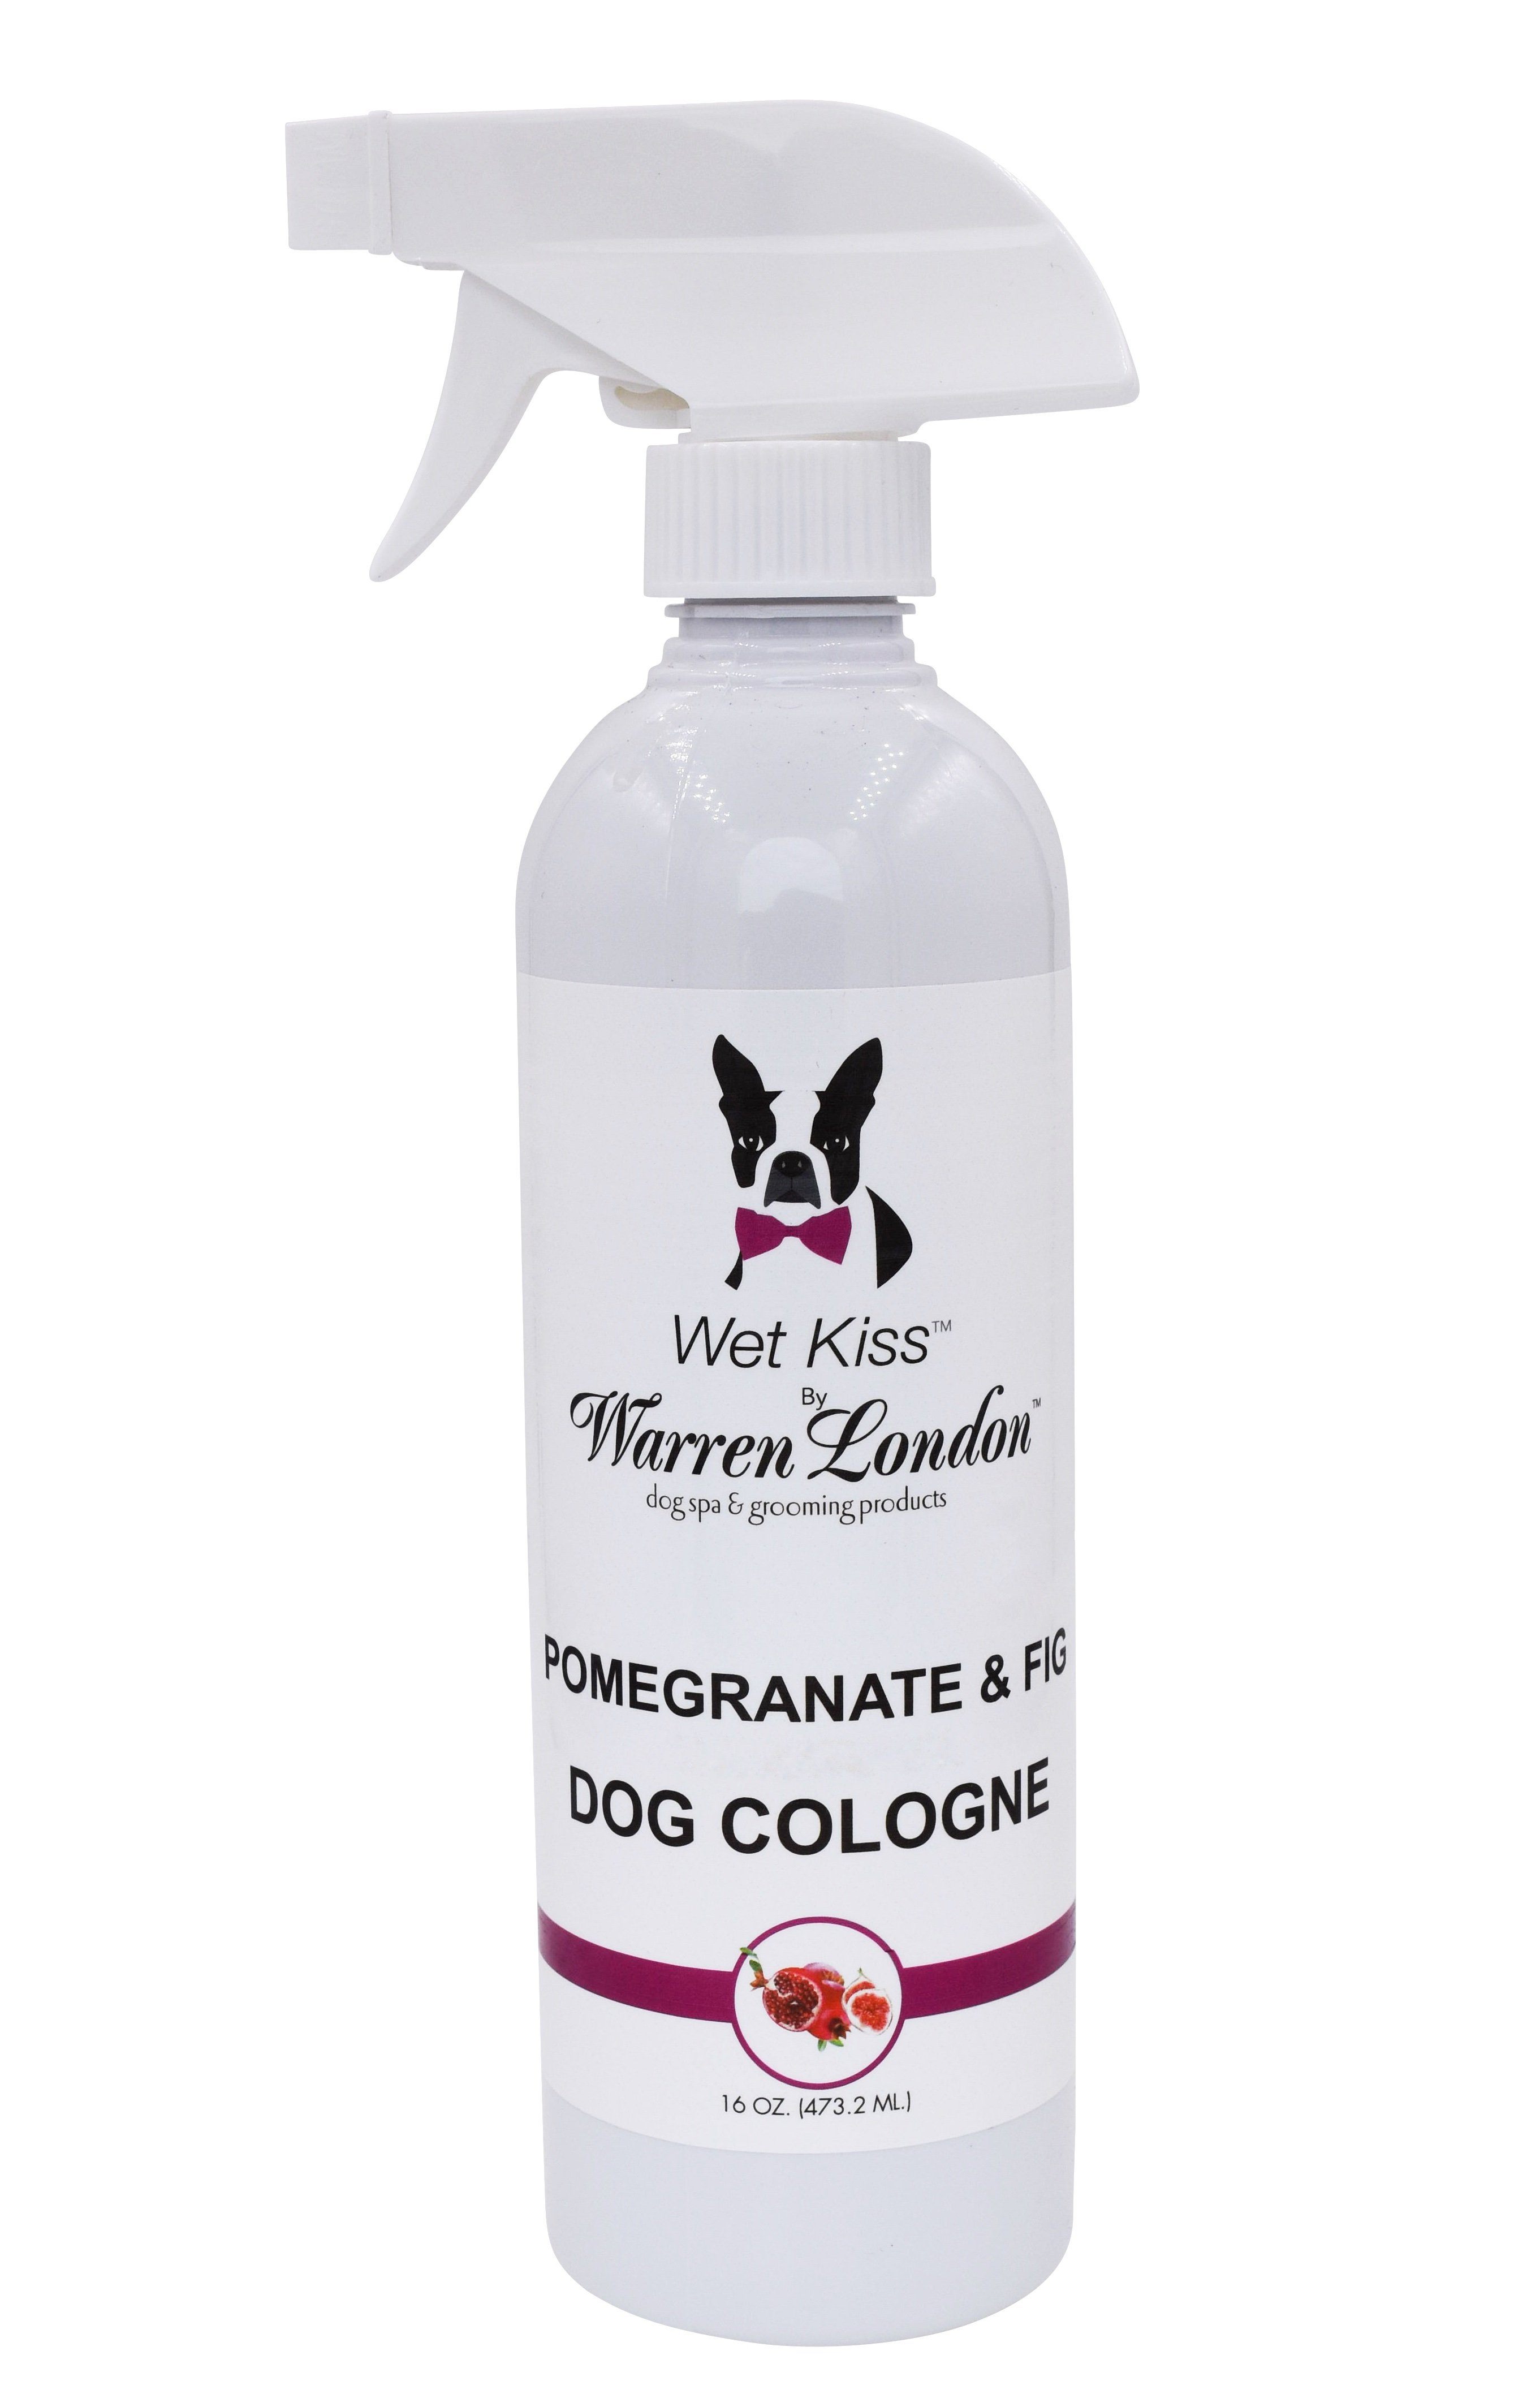 Wet Kiss Dog Cologne By Warren London - 2 Oz or 16 Oz Spa Product Warren London Pomegranate & Fig 16oz 